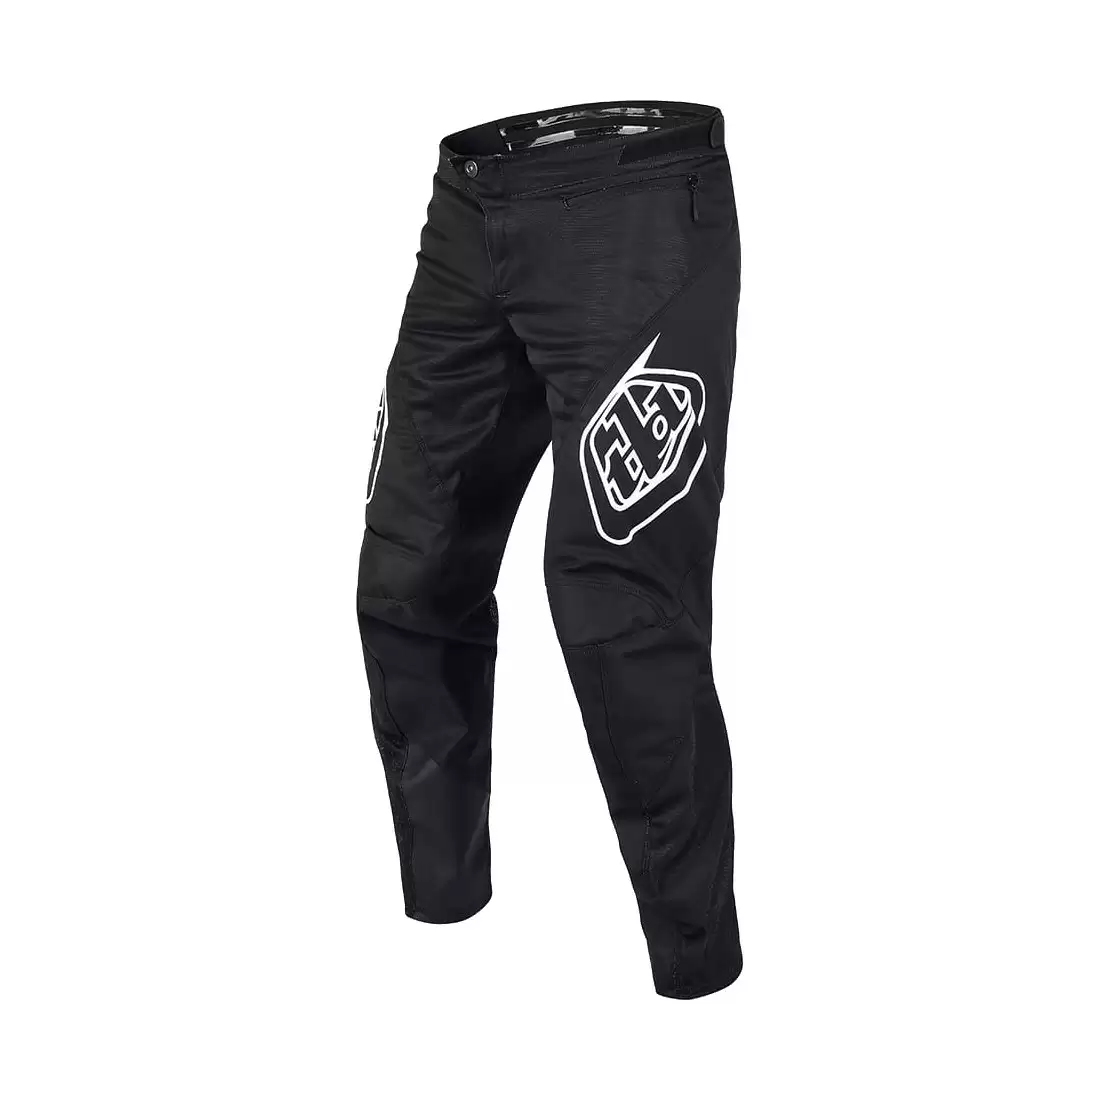 Pantalones MTB DH/Enduro Sprint Negro Talla XS - image